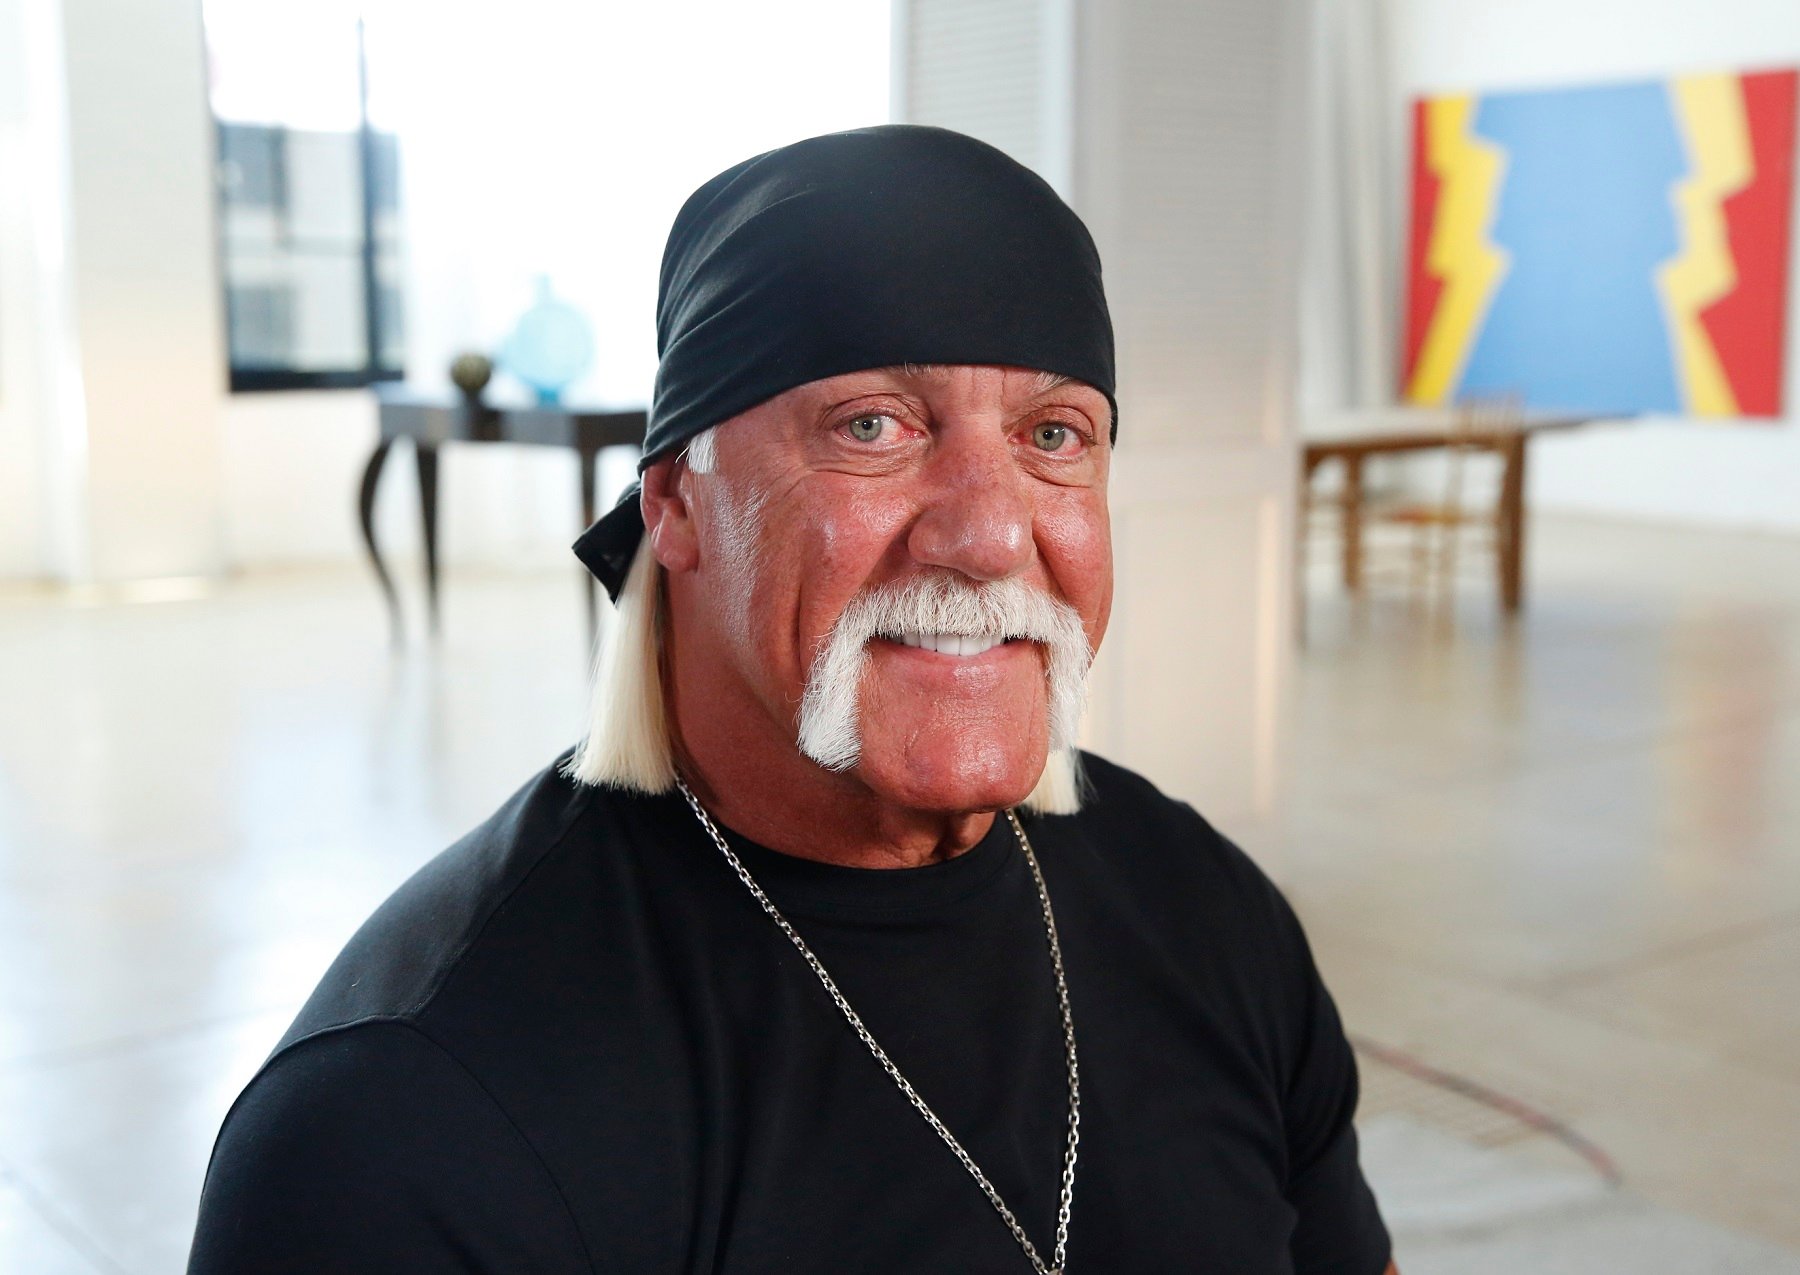 Hulk Hogan, pictured here in a black T-shirt and black bandana